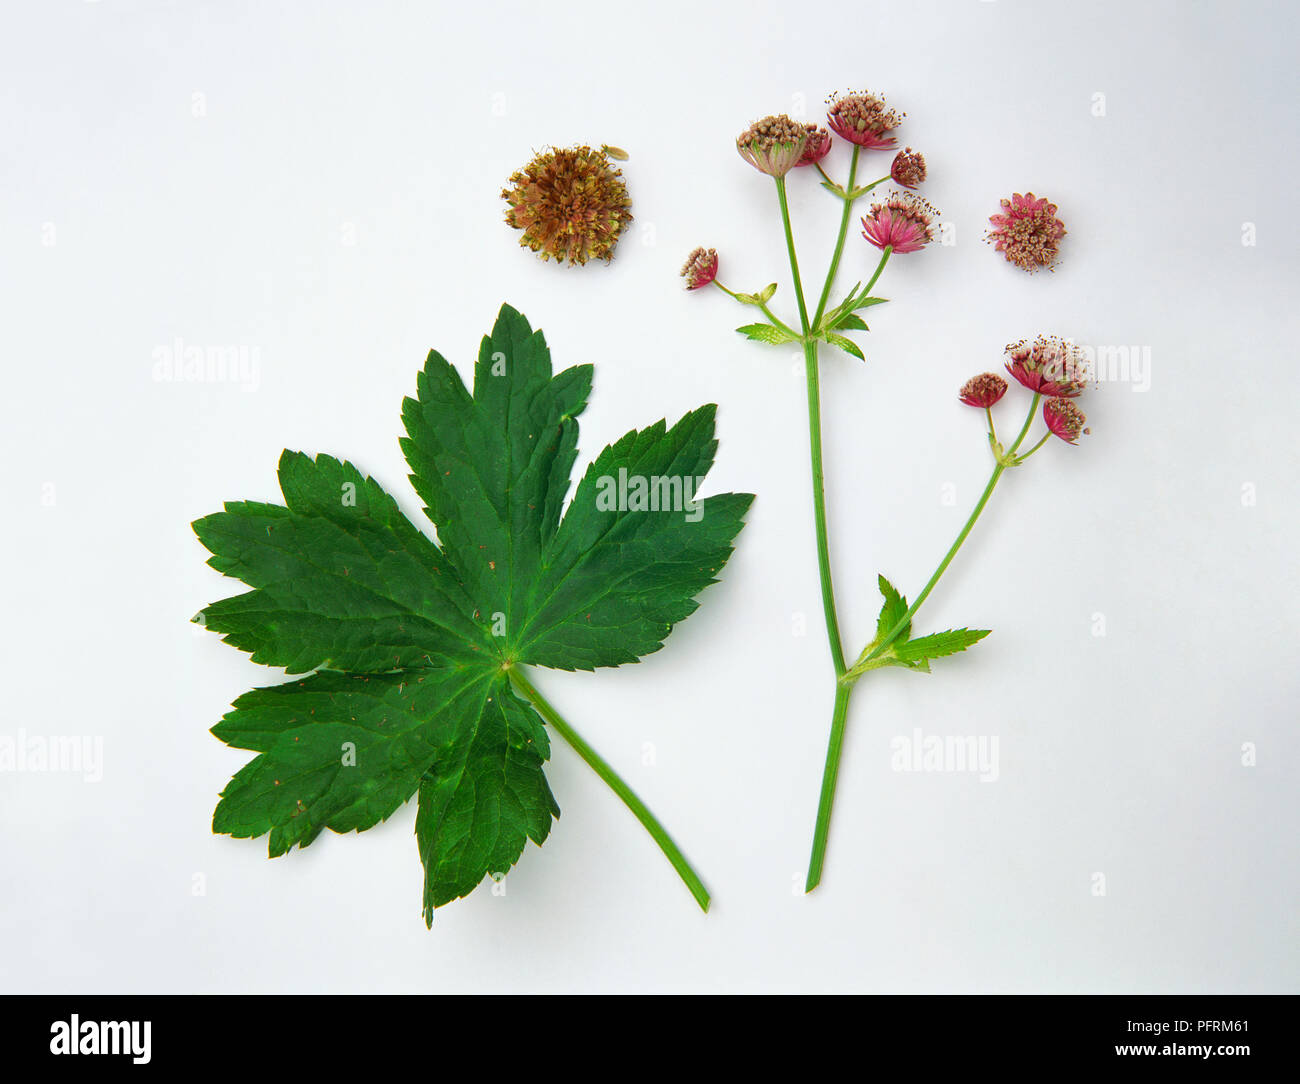 Astrantia major (Great masterwort), flowers and leaves Stock Photo